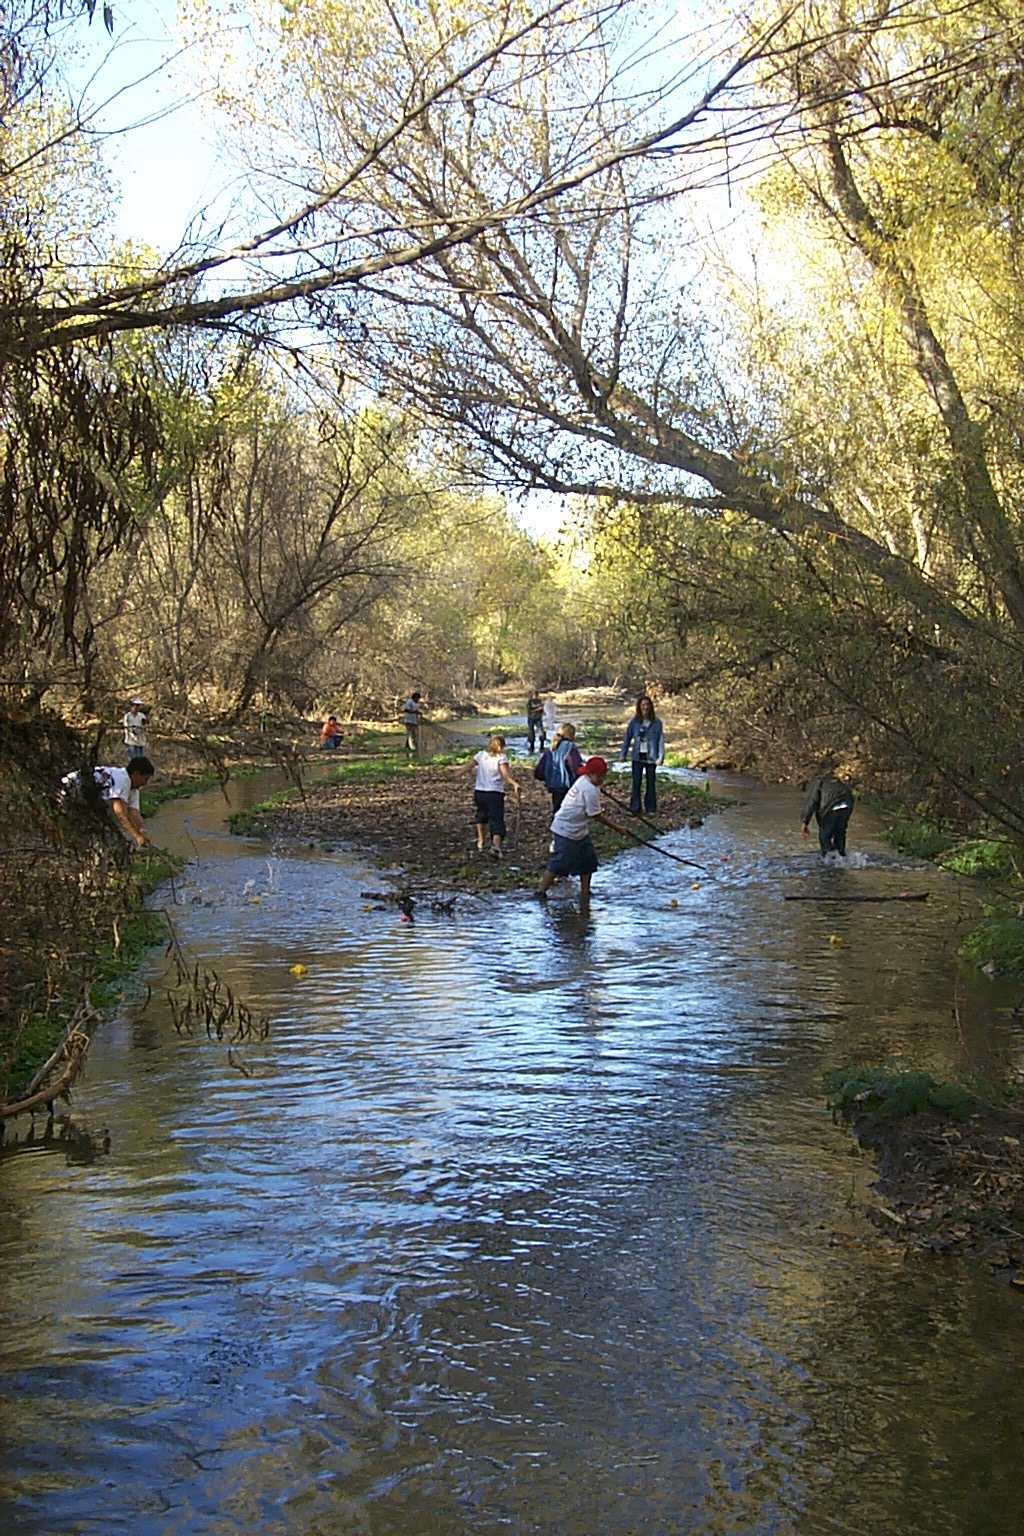 Kids in the river, duck race